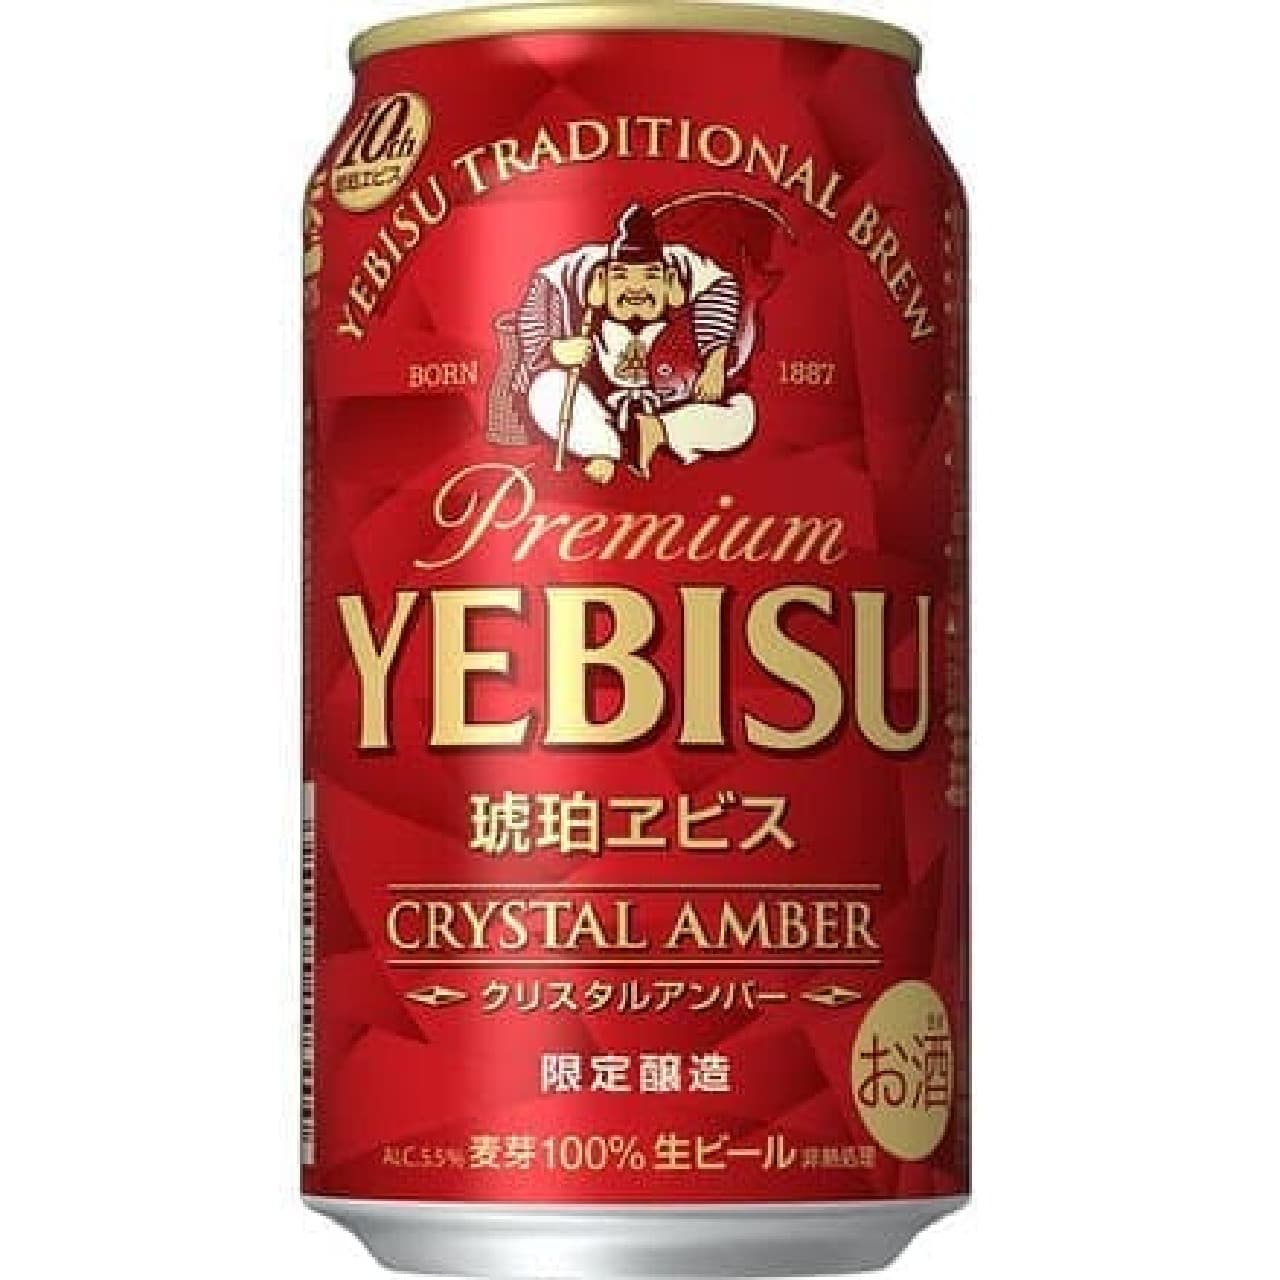 Limited brew of "Amber Yebisu" celebrating its 10th anniversary